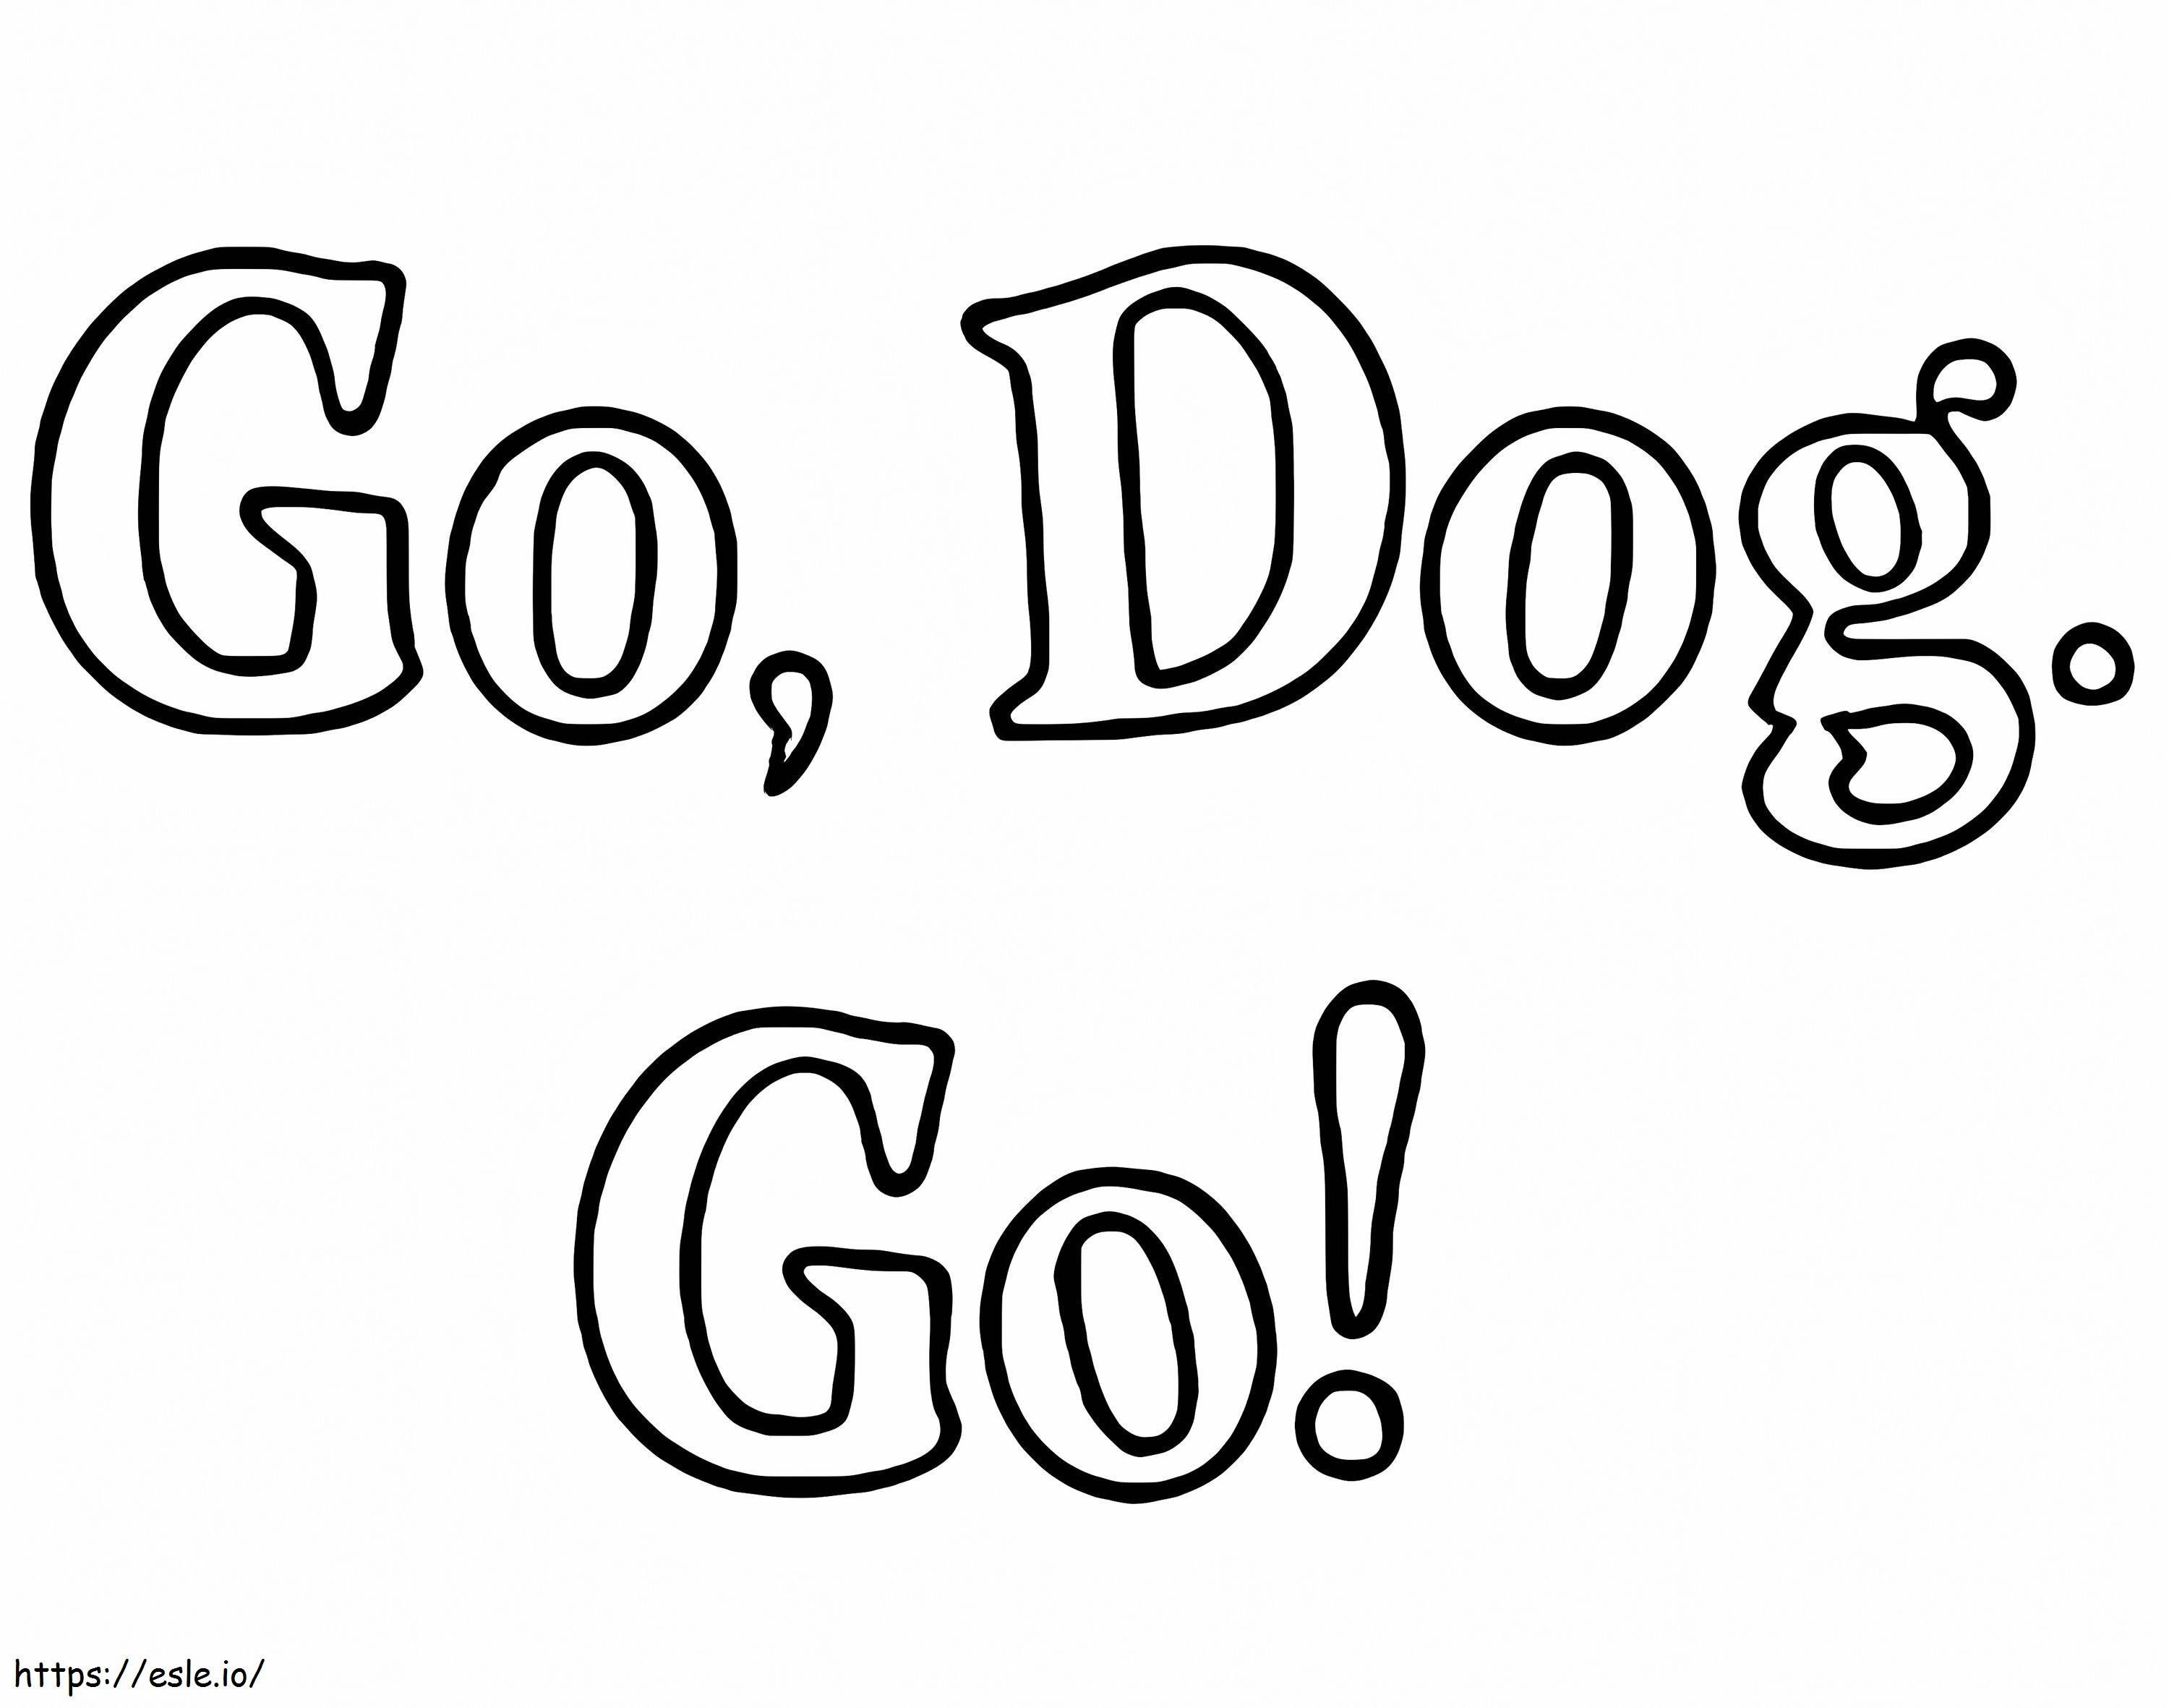 Go Dog Go Logo coloring page